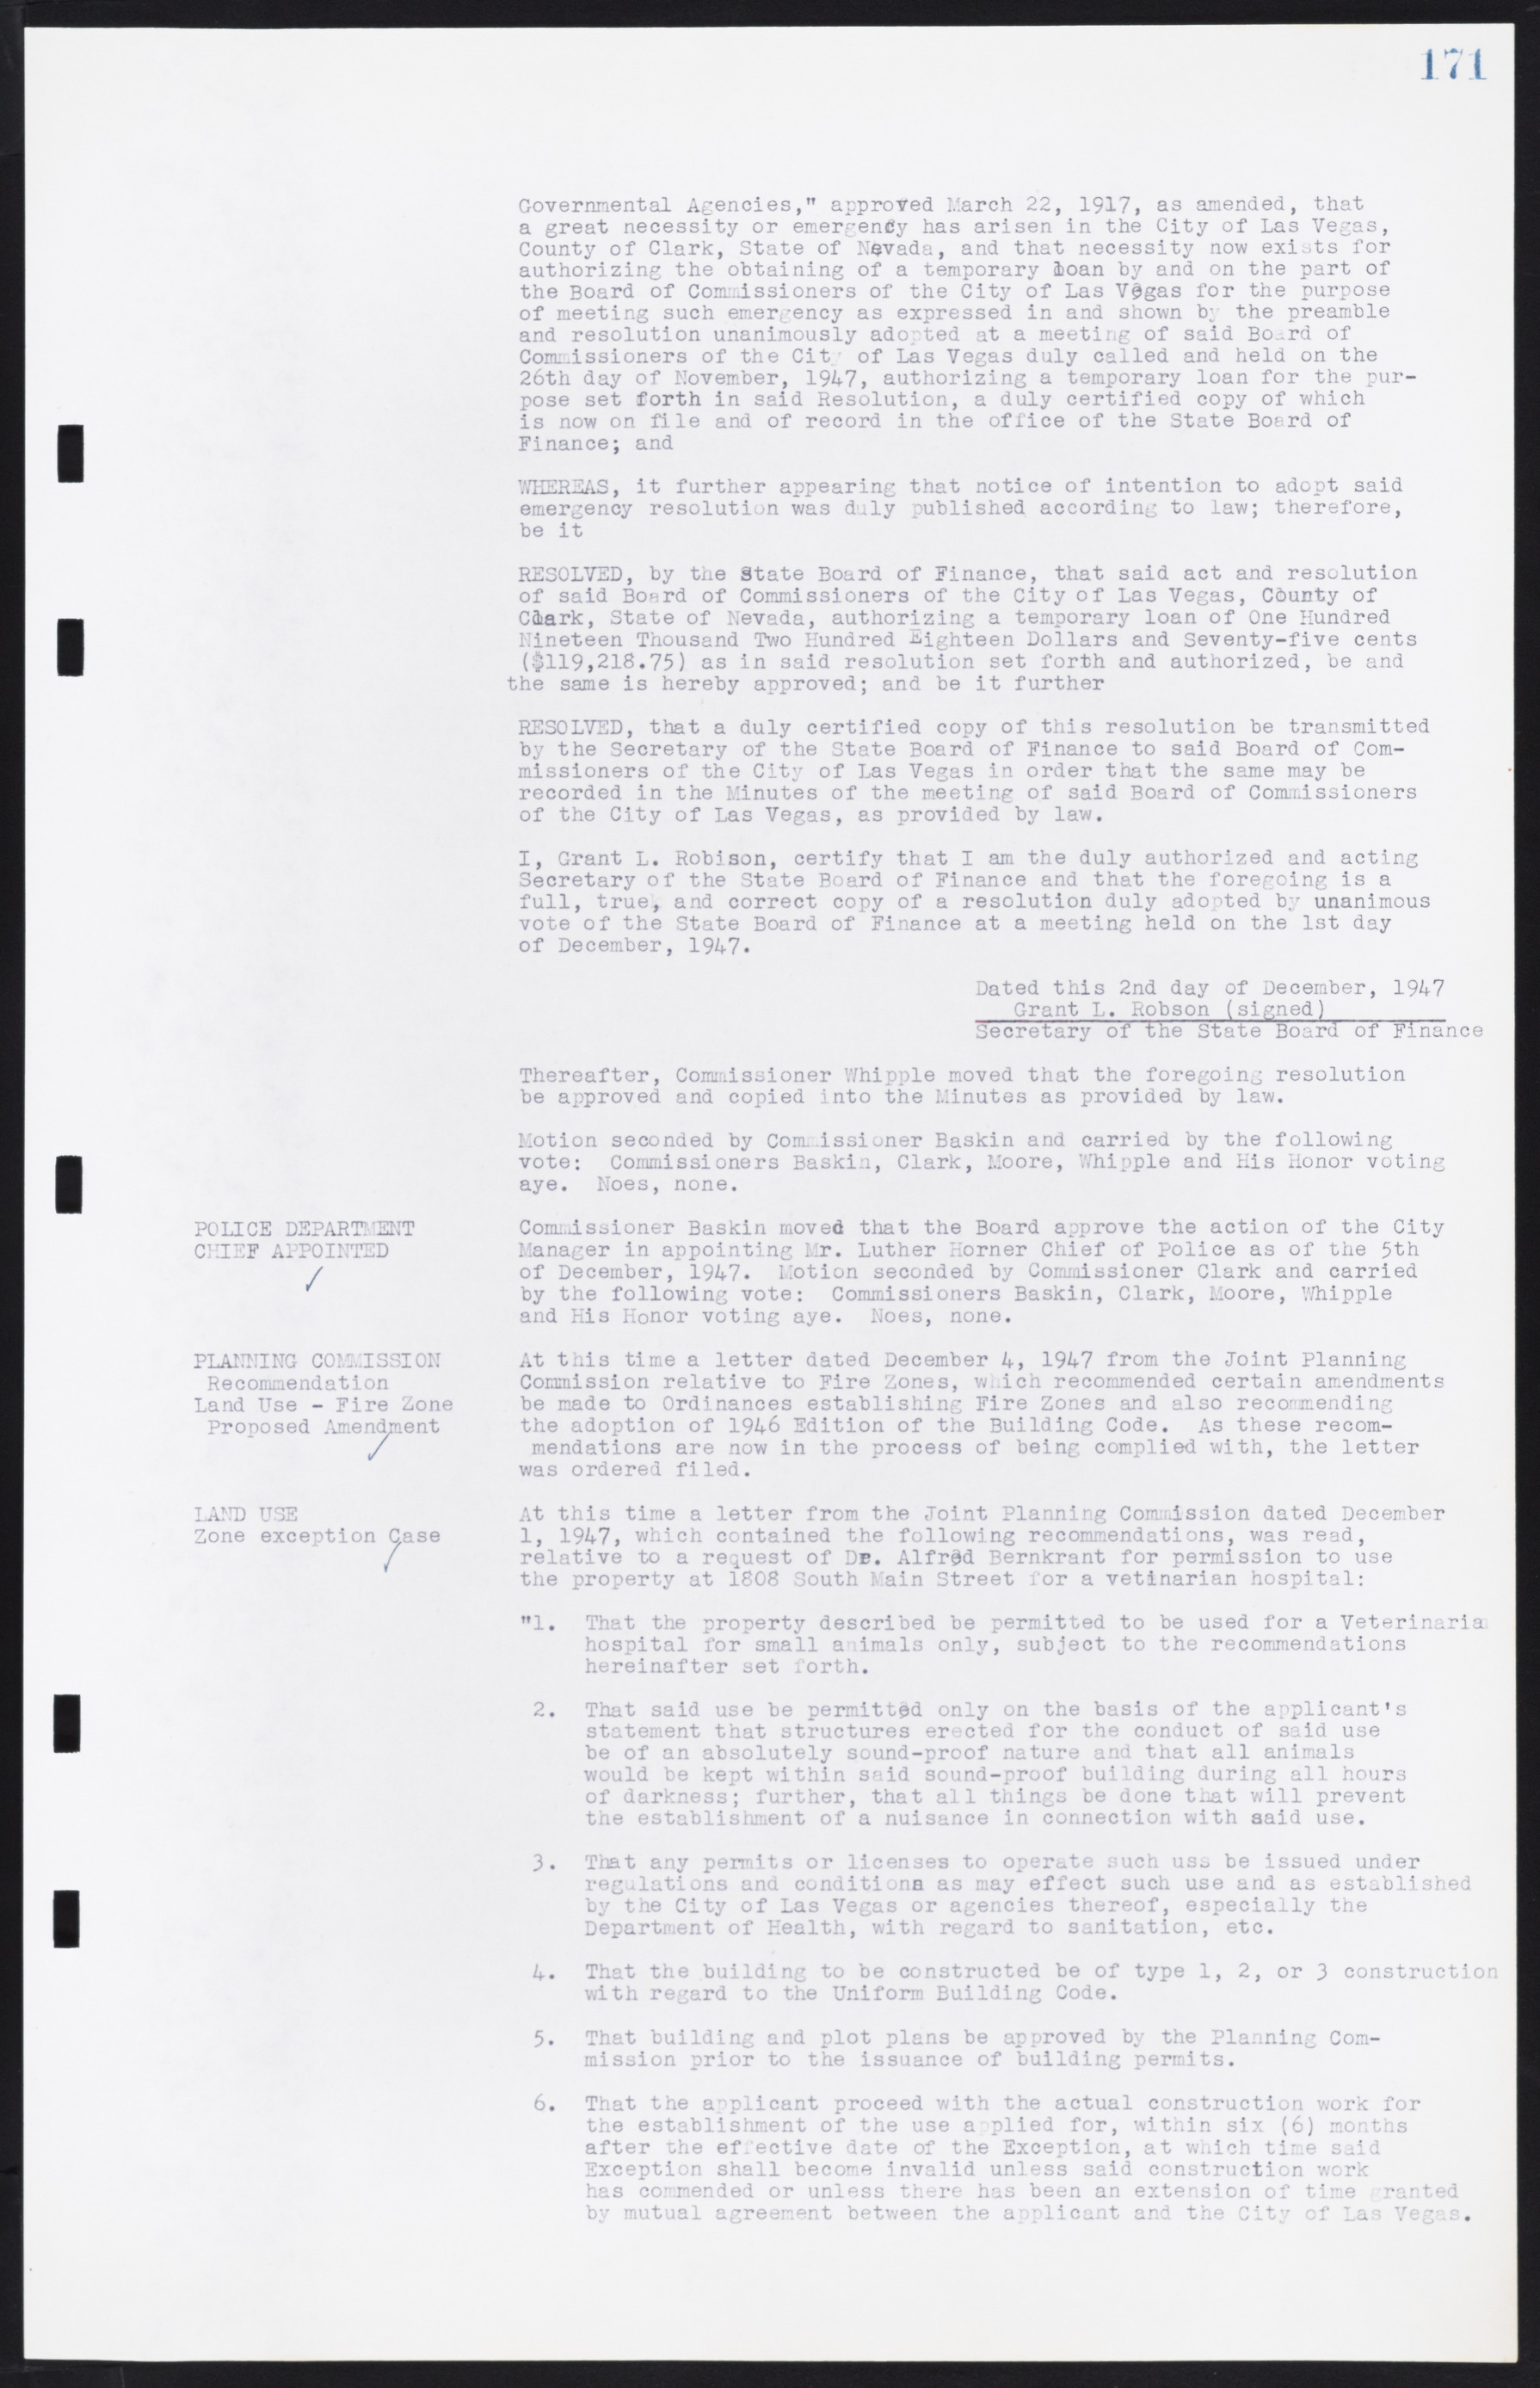 Las Vegas City Commission Minutes, January 7, 1947 to October 26, 1949, lvc000006-191